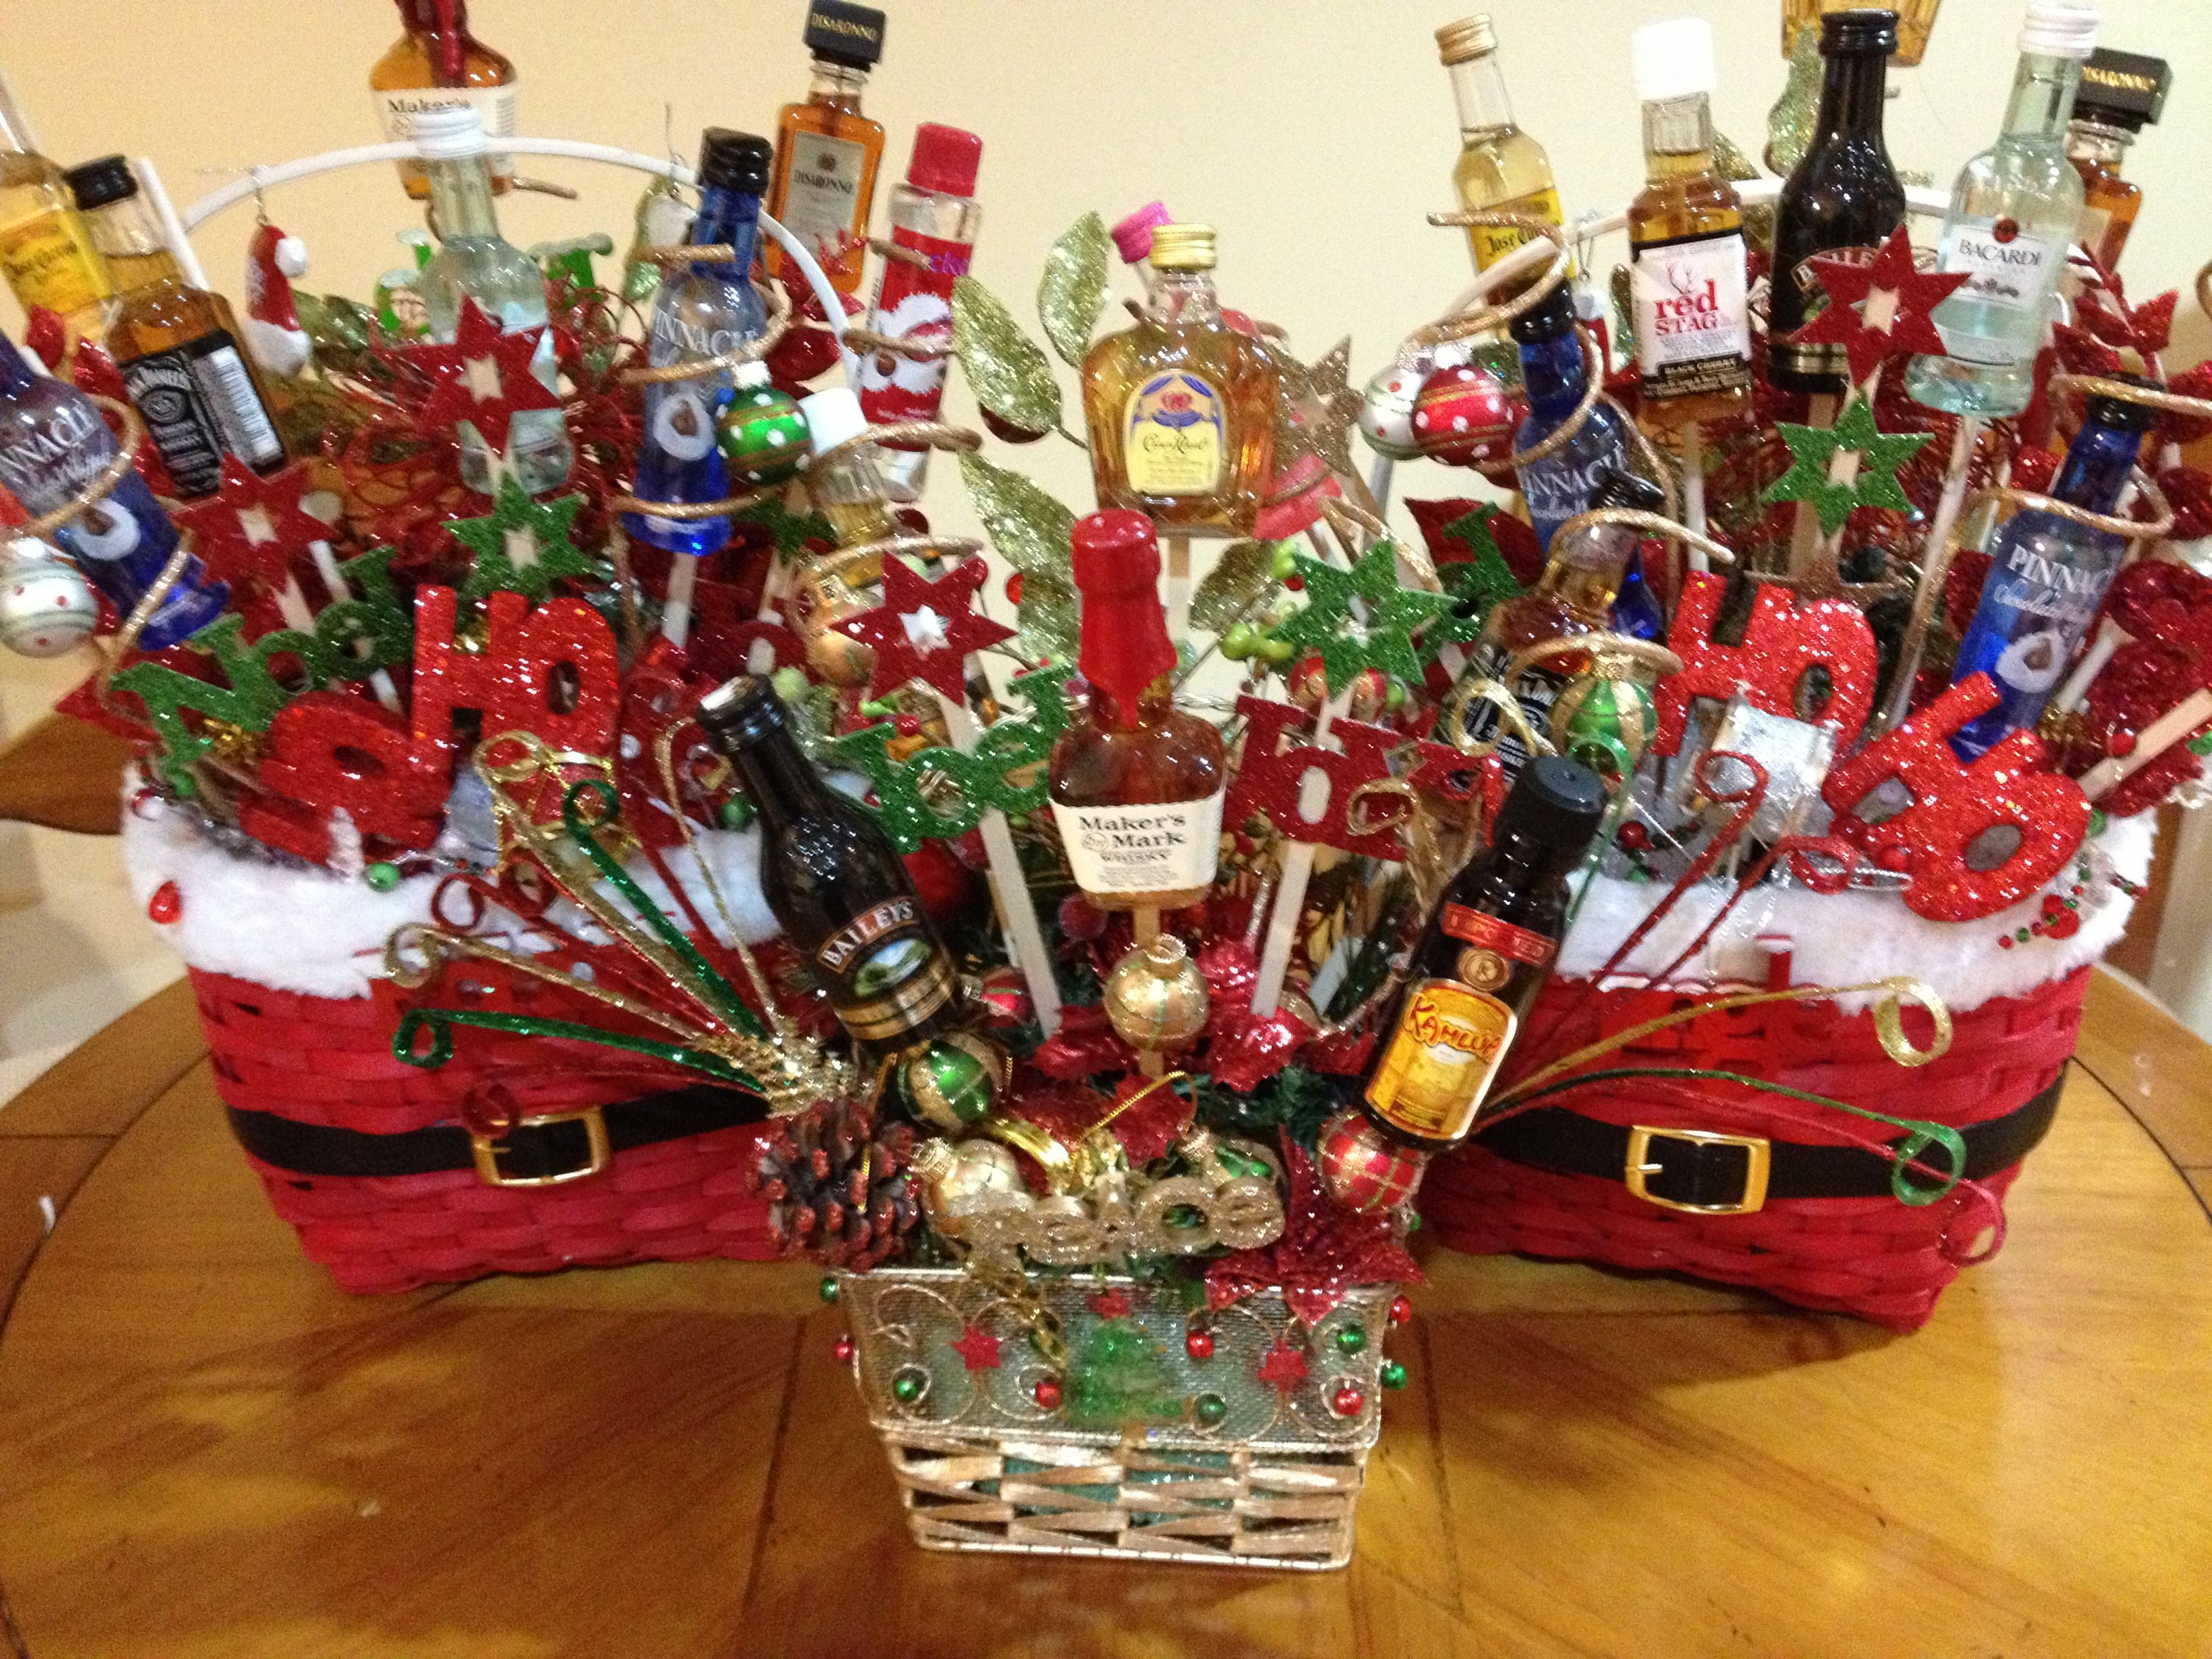 Best ideas about Liquor Gift Basket Ideas
. Save or Pin Best 25 Liquor t baskets ideas on Pinterest Now.